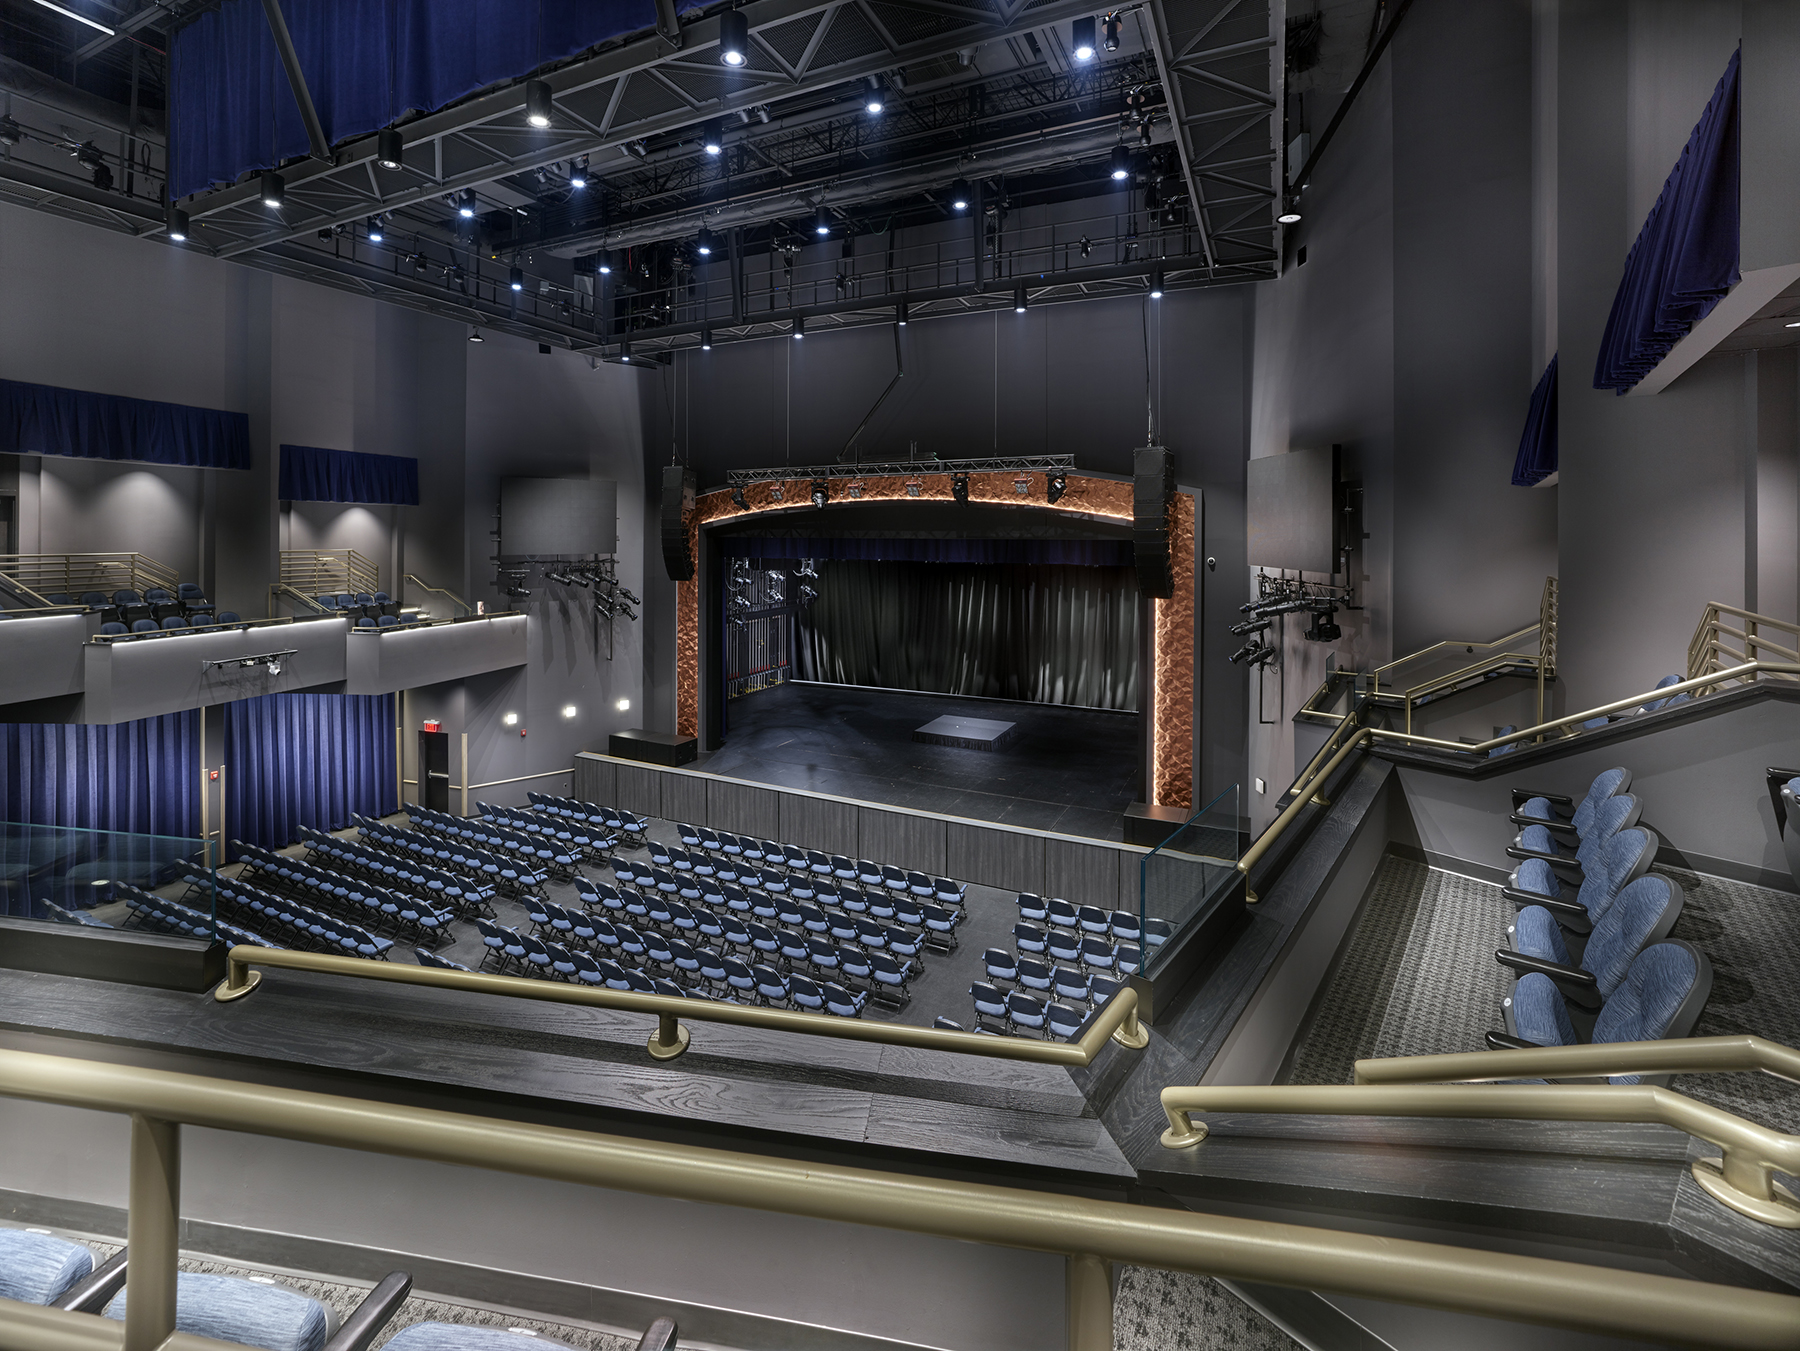 Auditorium at Carteret Performing Arts Center, New Jersey